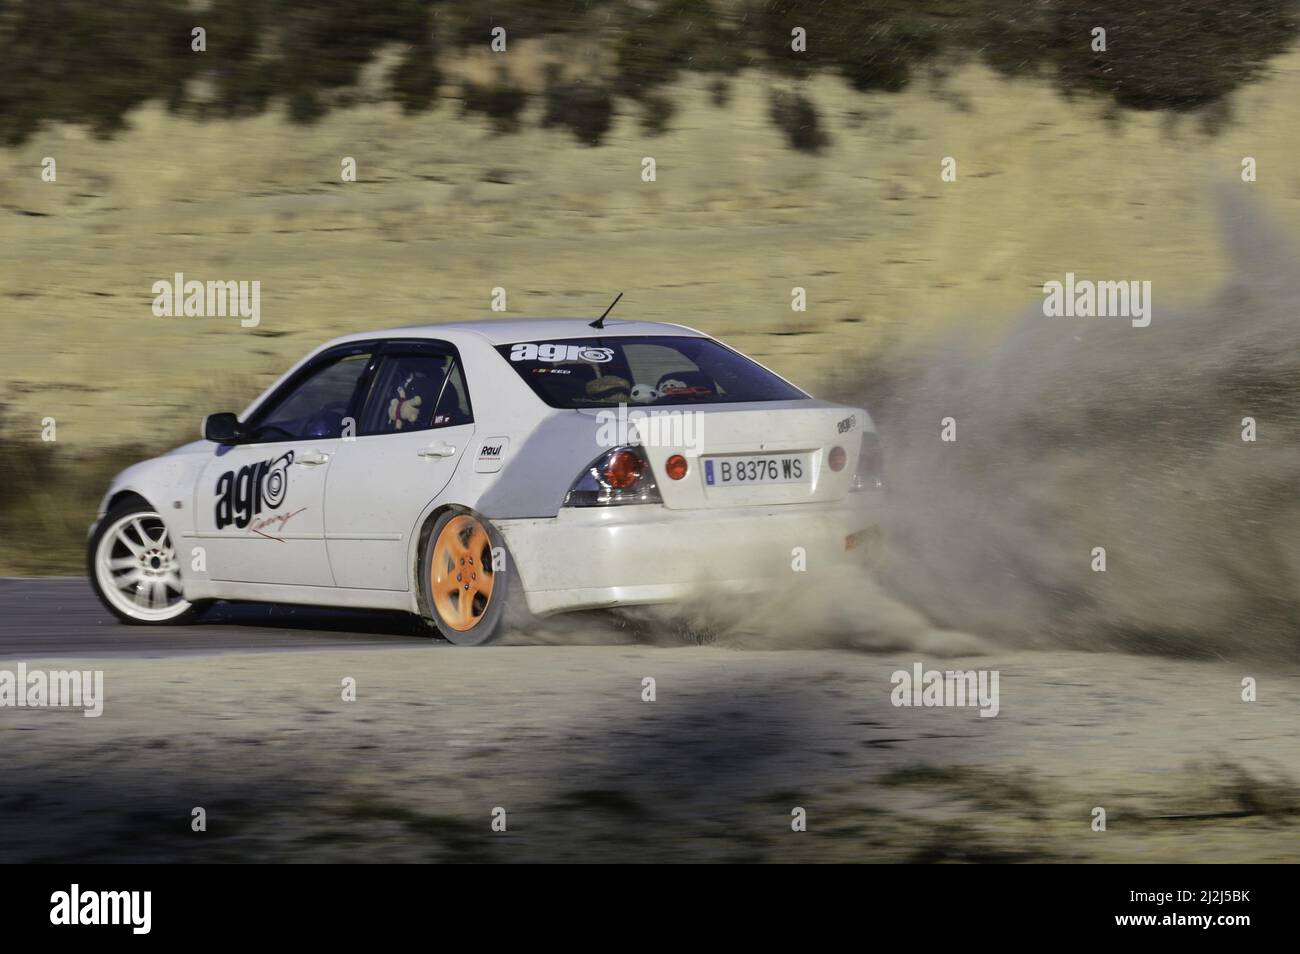 A custom street car drifting on the track lifting dust. Lexus IS200 Stock Photo